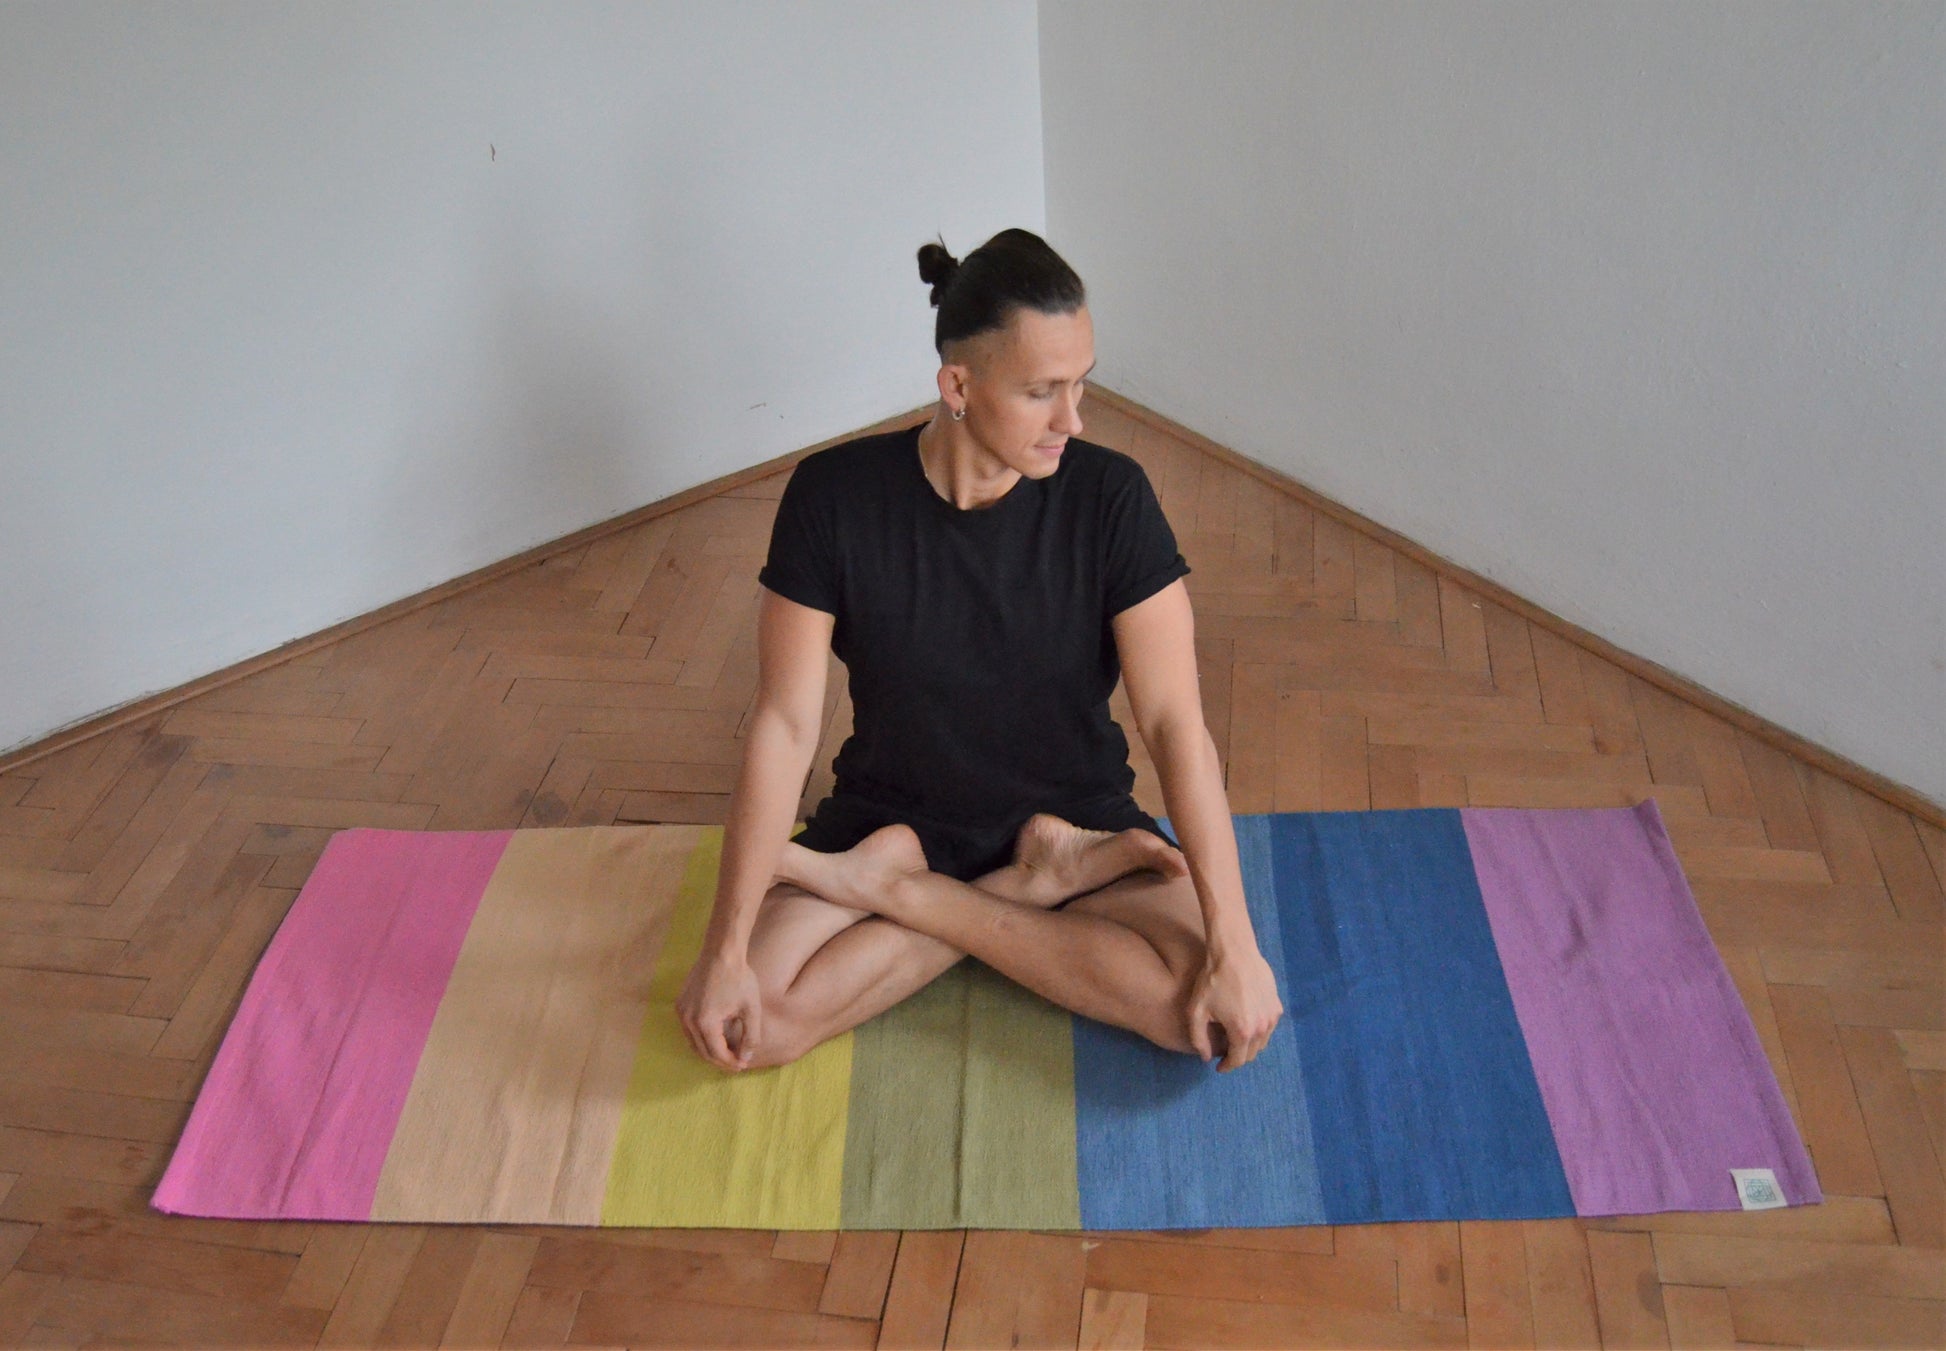 Organic cotton yoga mat vs Yoga rug – Leela yoga rugs